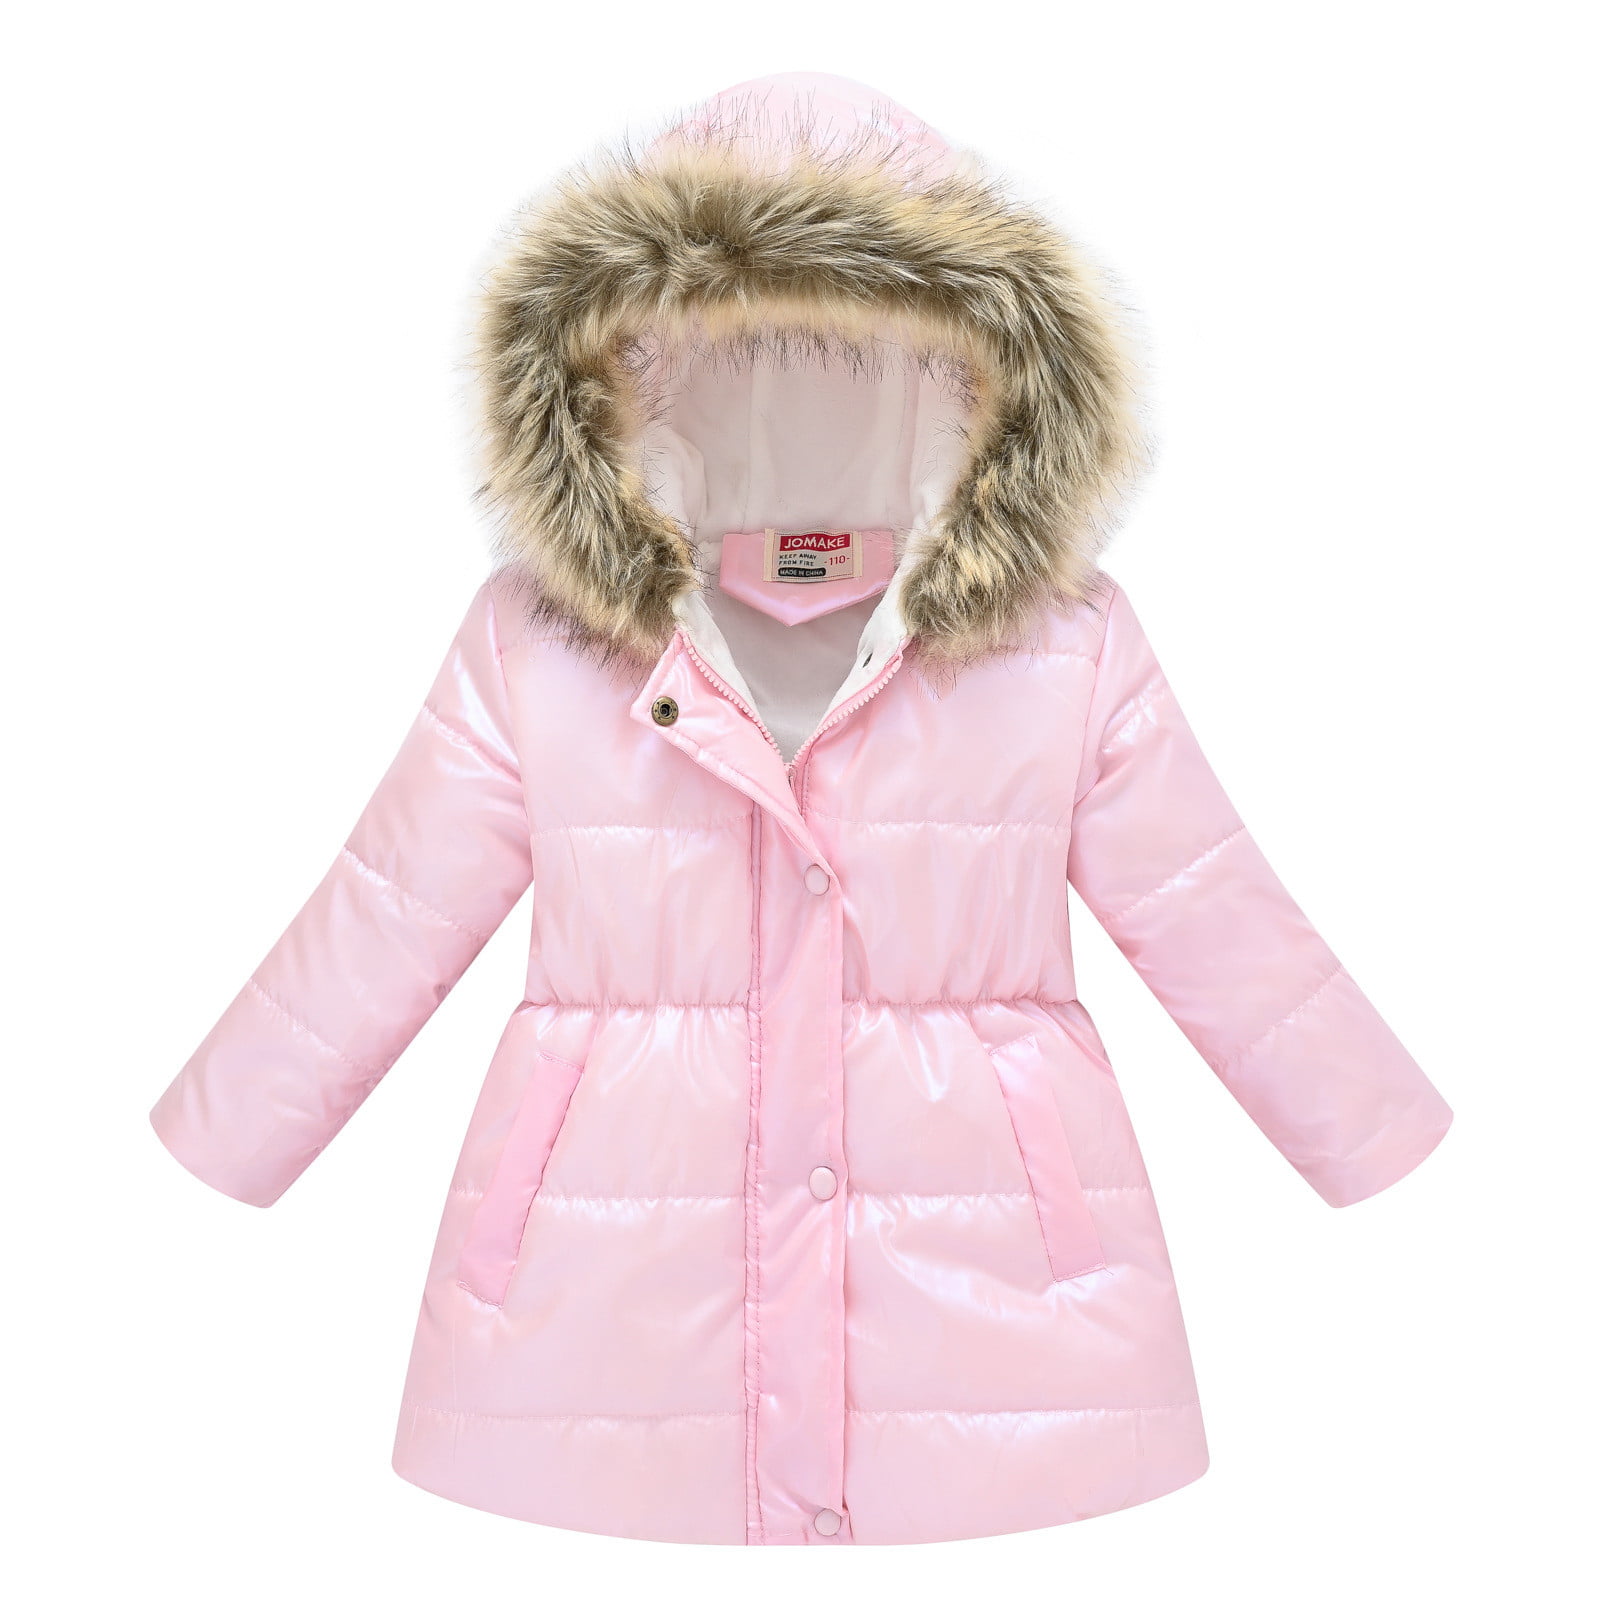 Kids Boys Girls Thick Coat Padded Winter Jacket Fur Collar Parka Outwear 3-7T